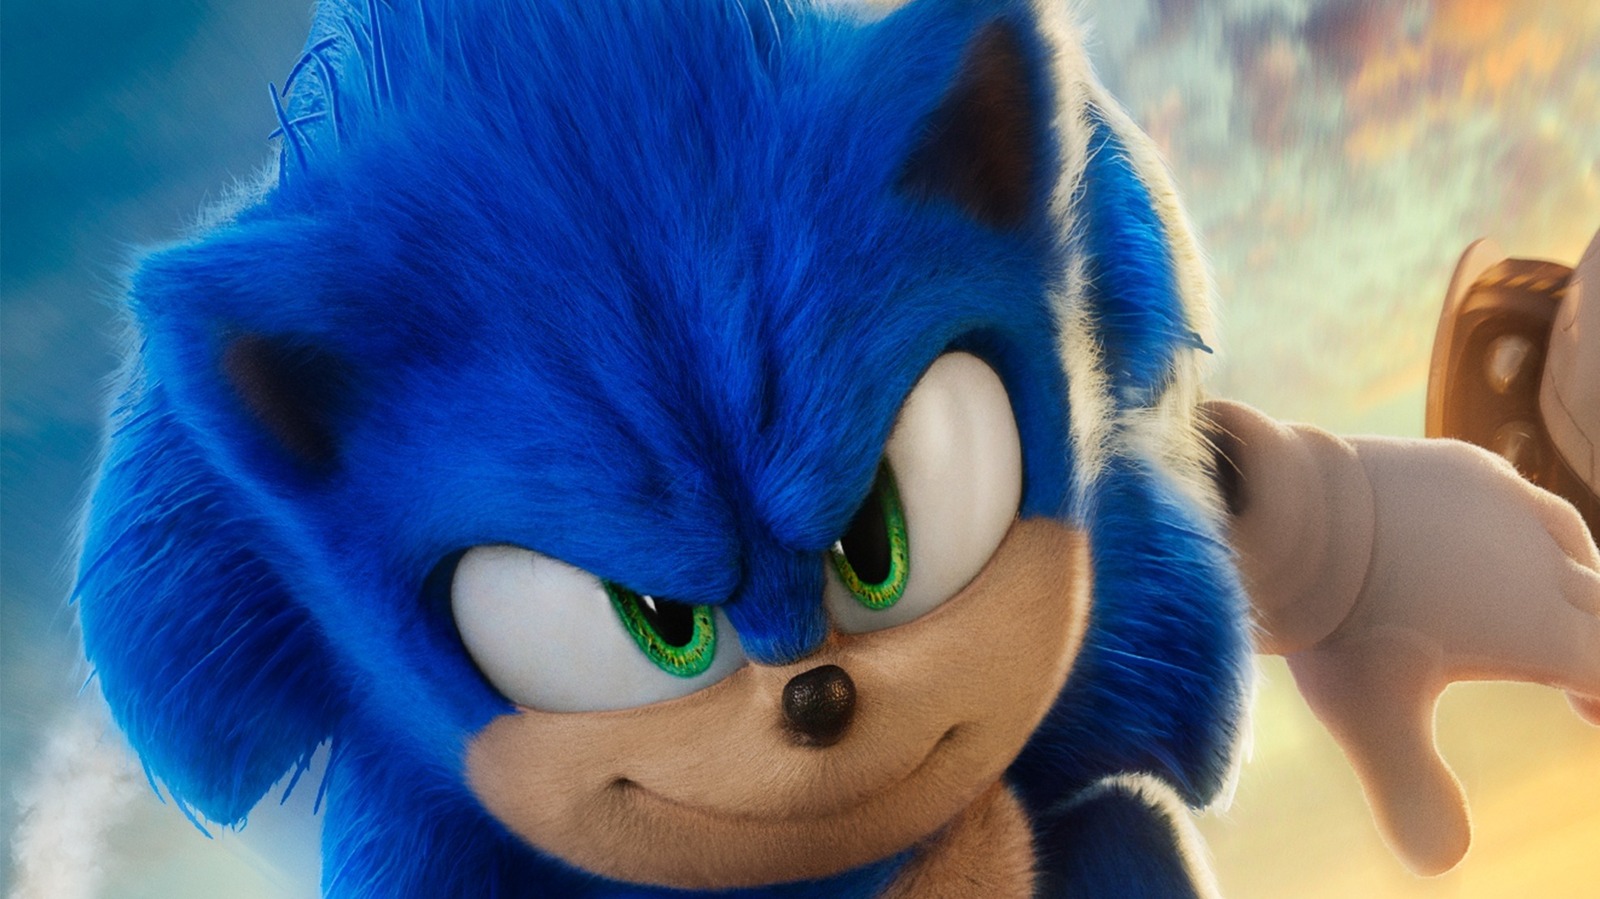 Sonic the Hedgehog 3: Waves of Change